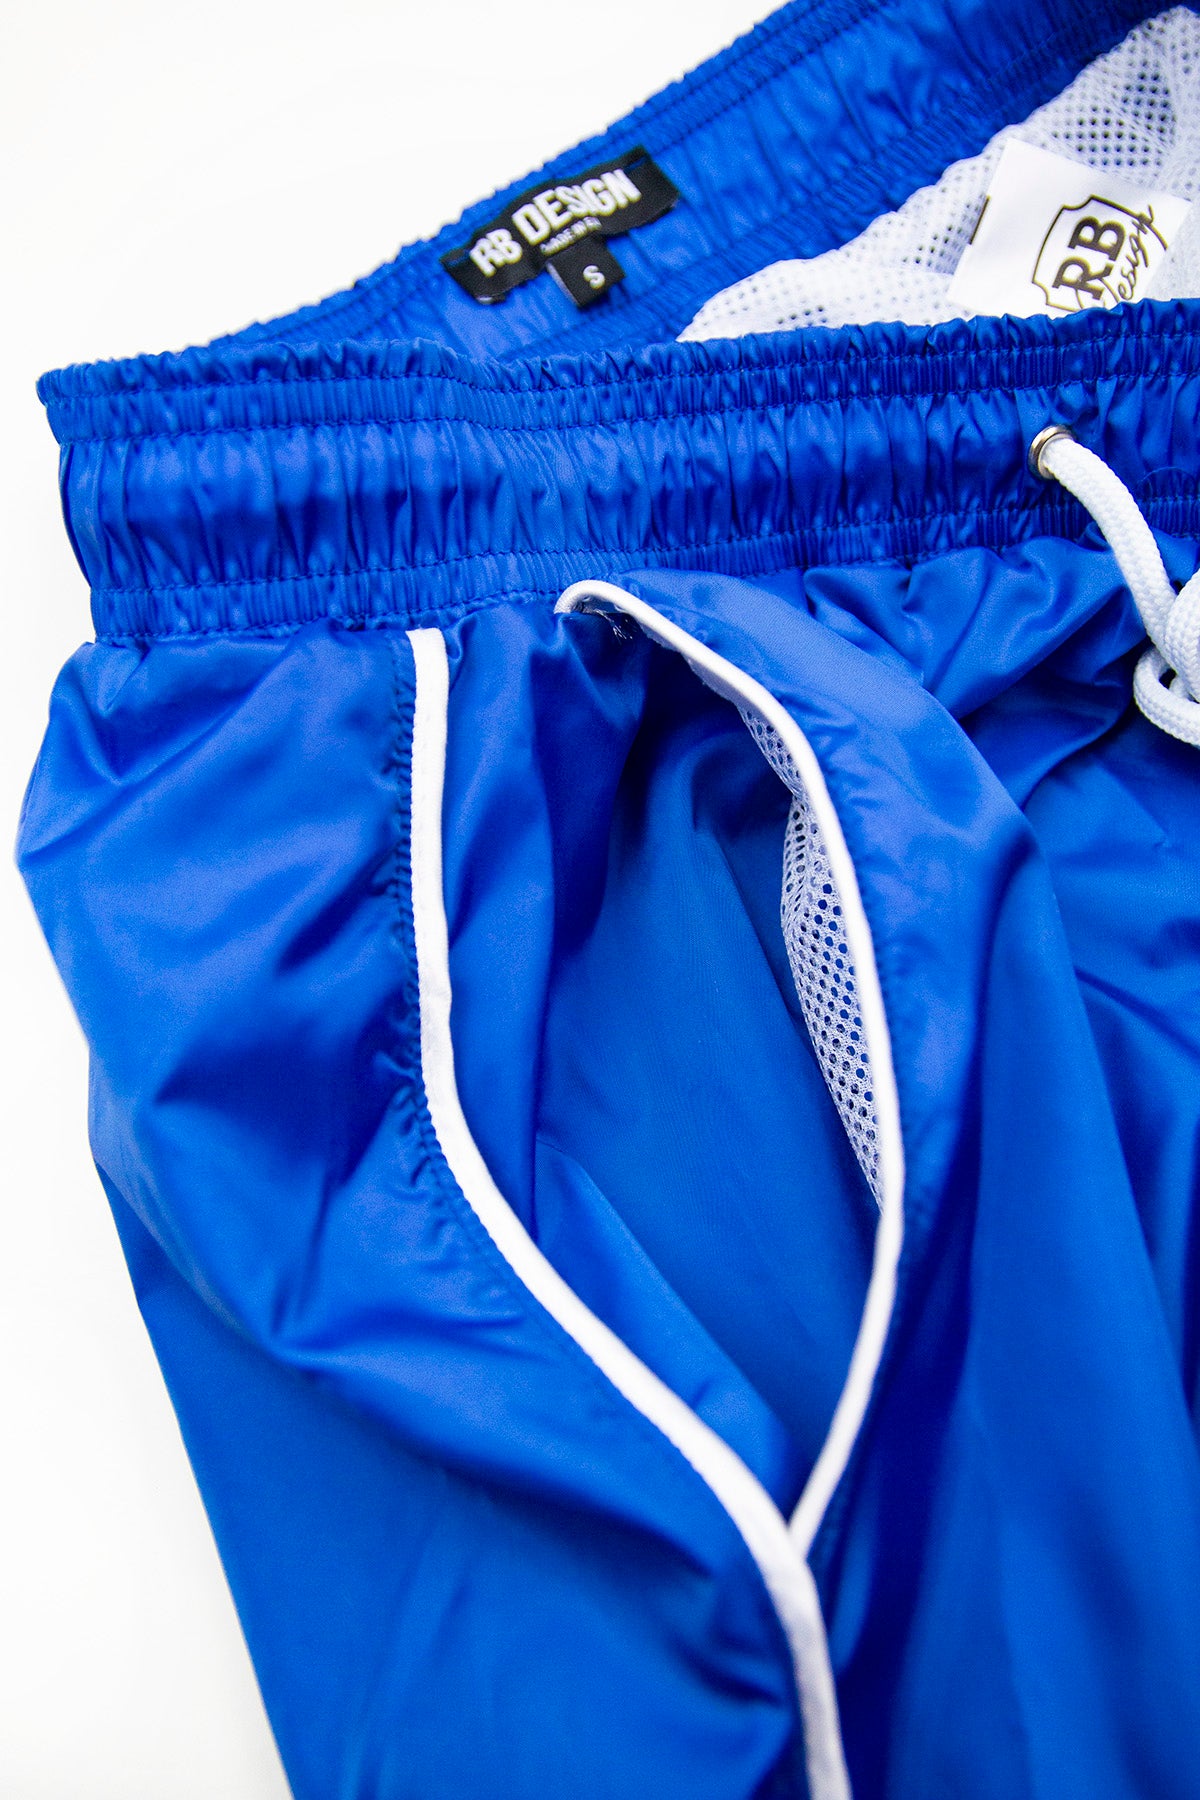 Bundle 3 -  Blue Mens Swimming Shorts + Blue Hat + Tank Top MD932